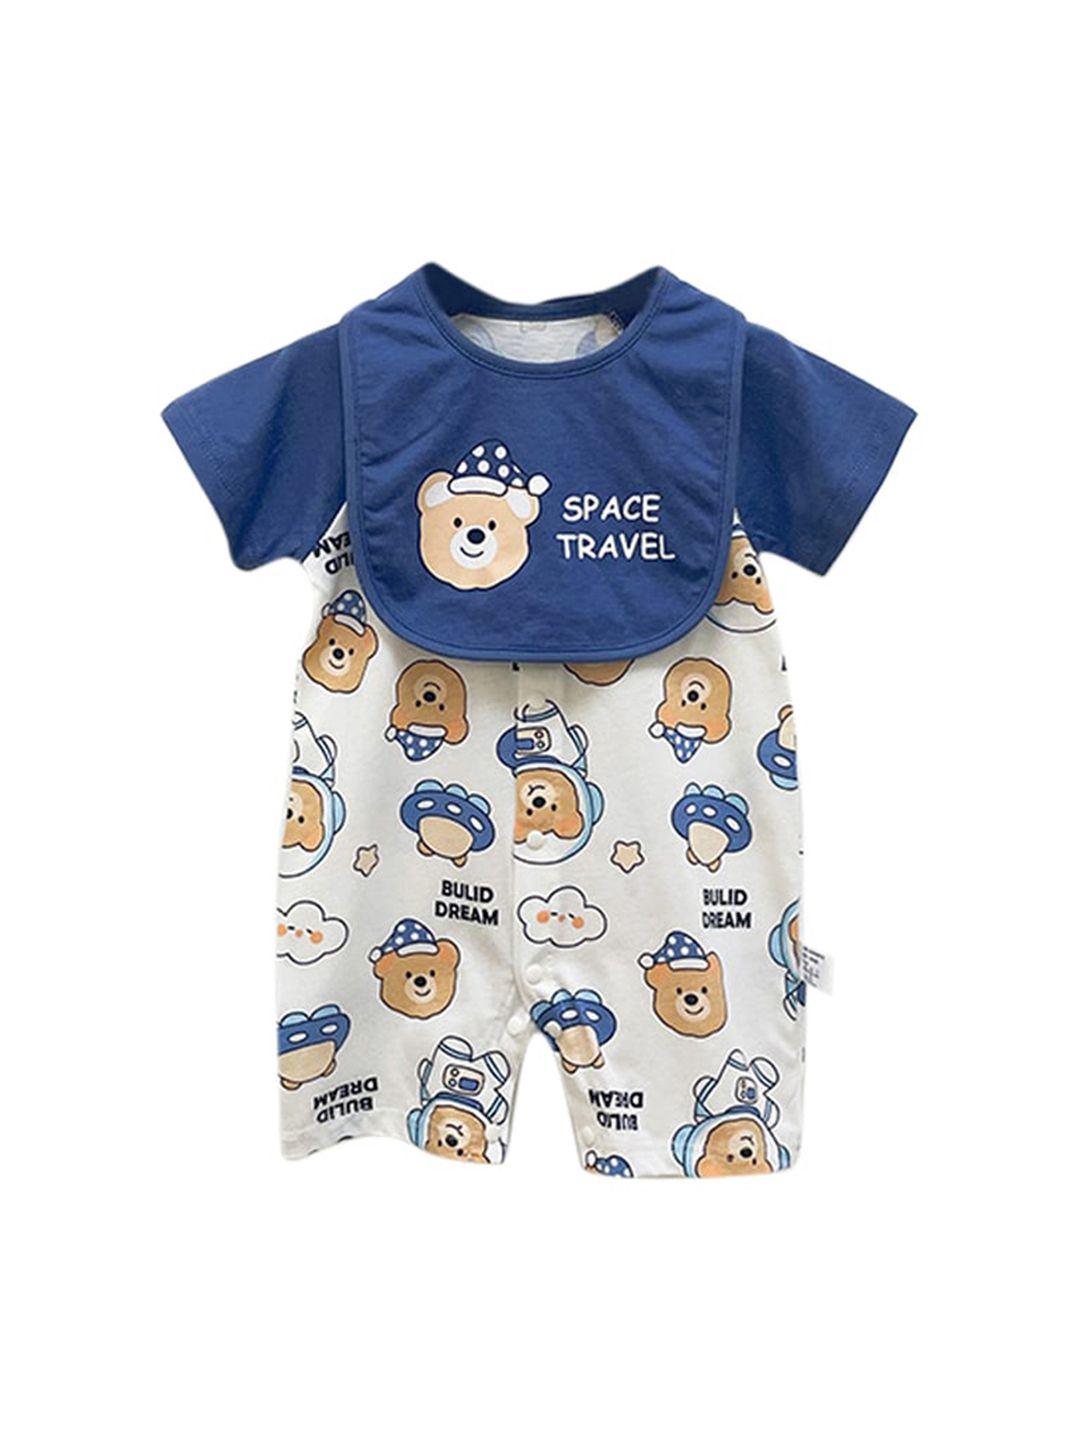 stylecast navy blue & white infant boys conversational printed short sleeves cotton romper